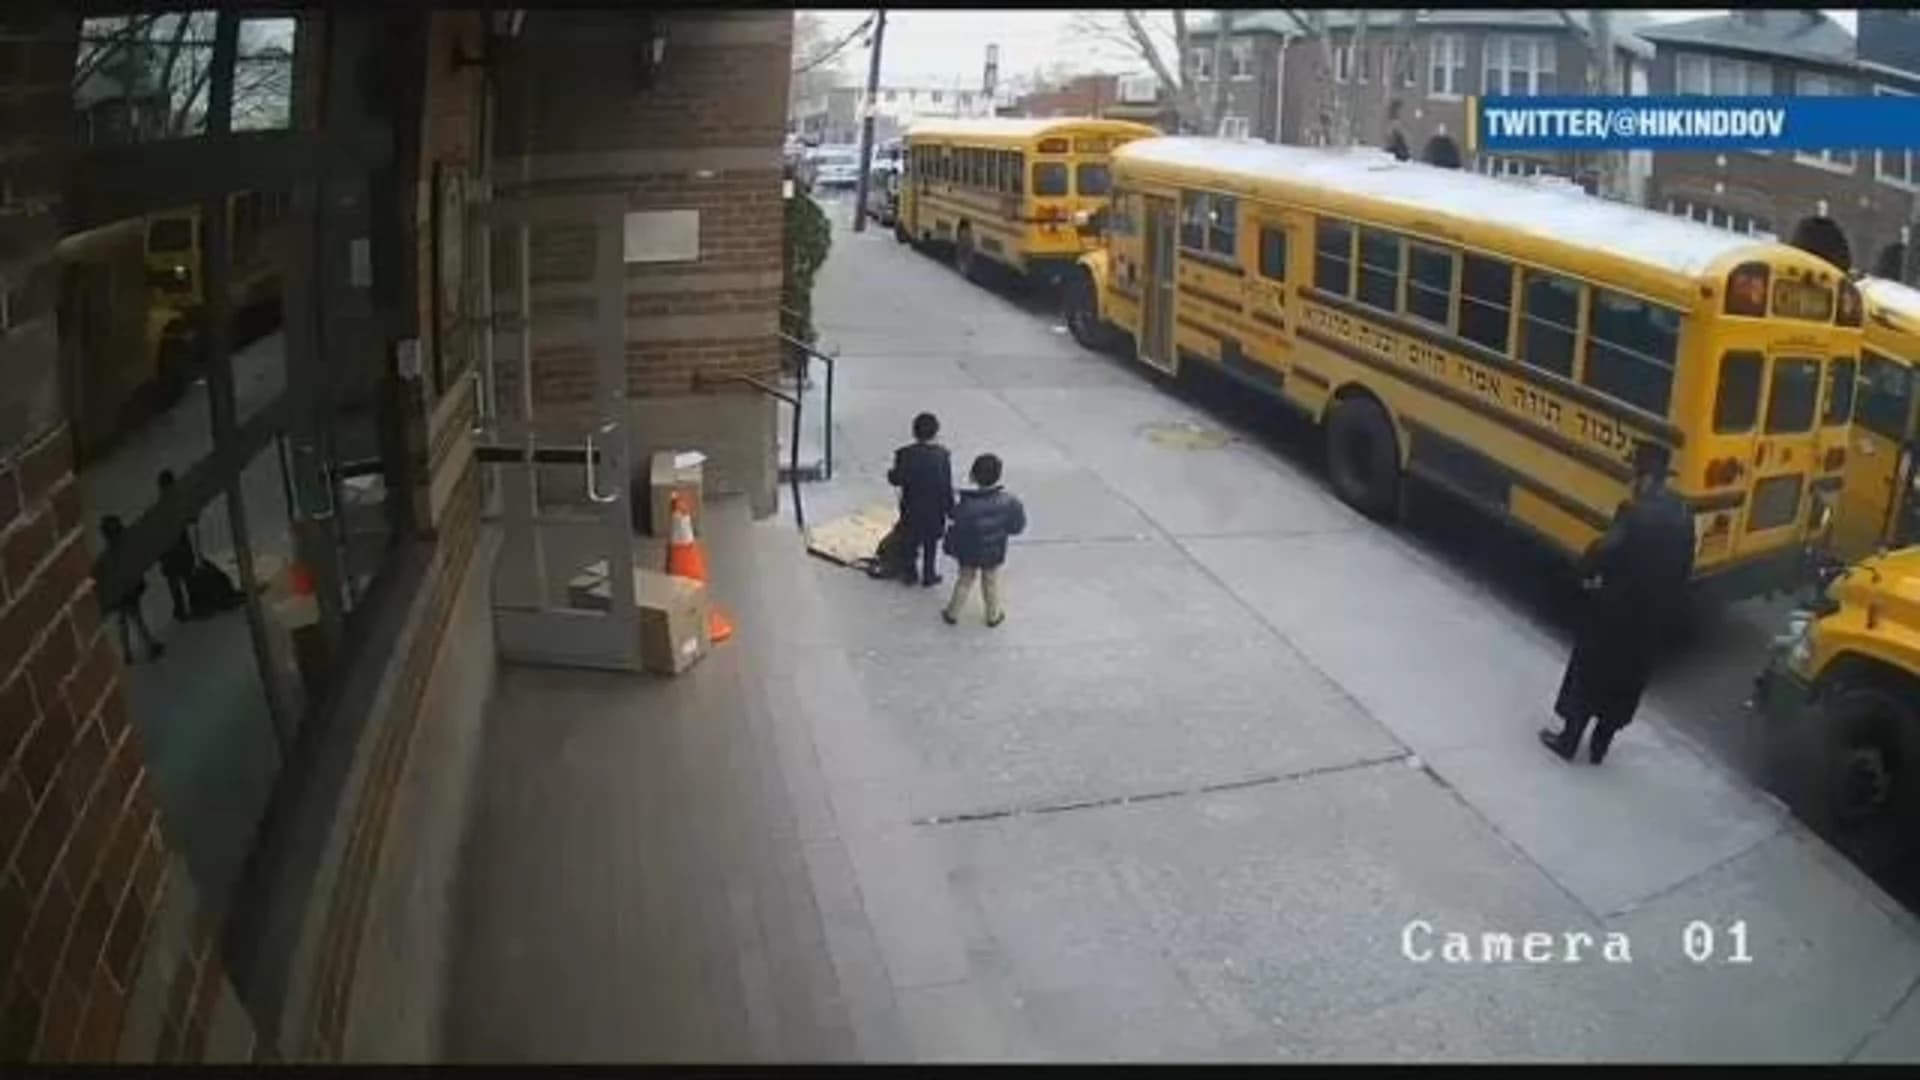 Caught on camera: Driver on sidewalk nearly misses hitting children